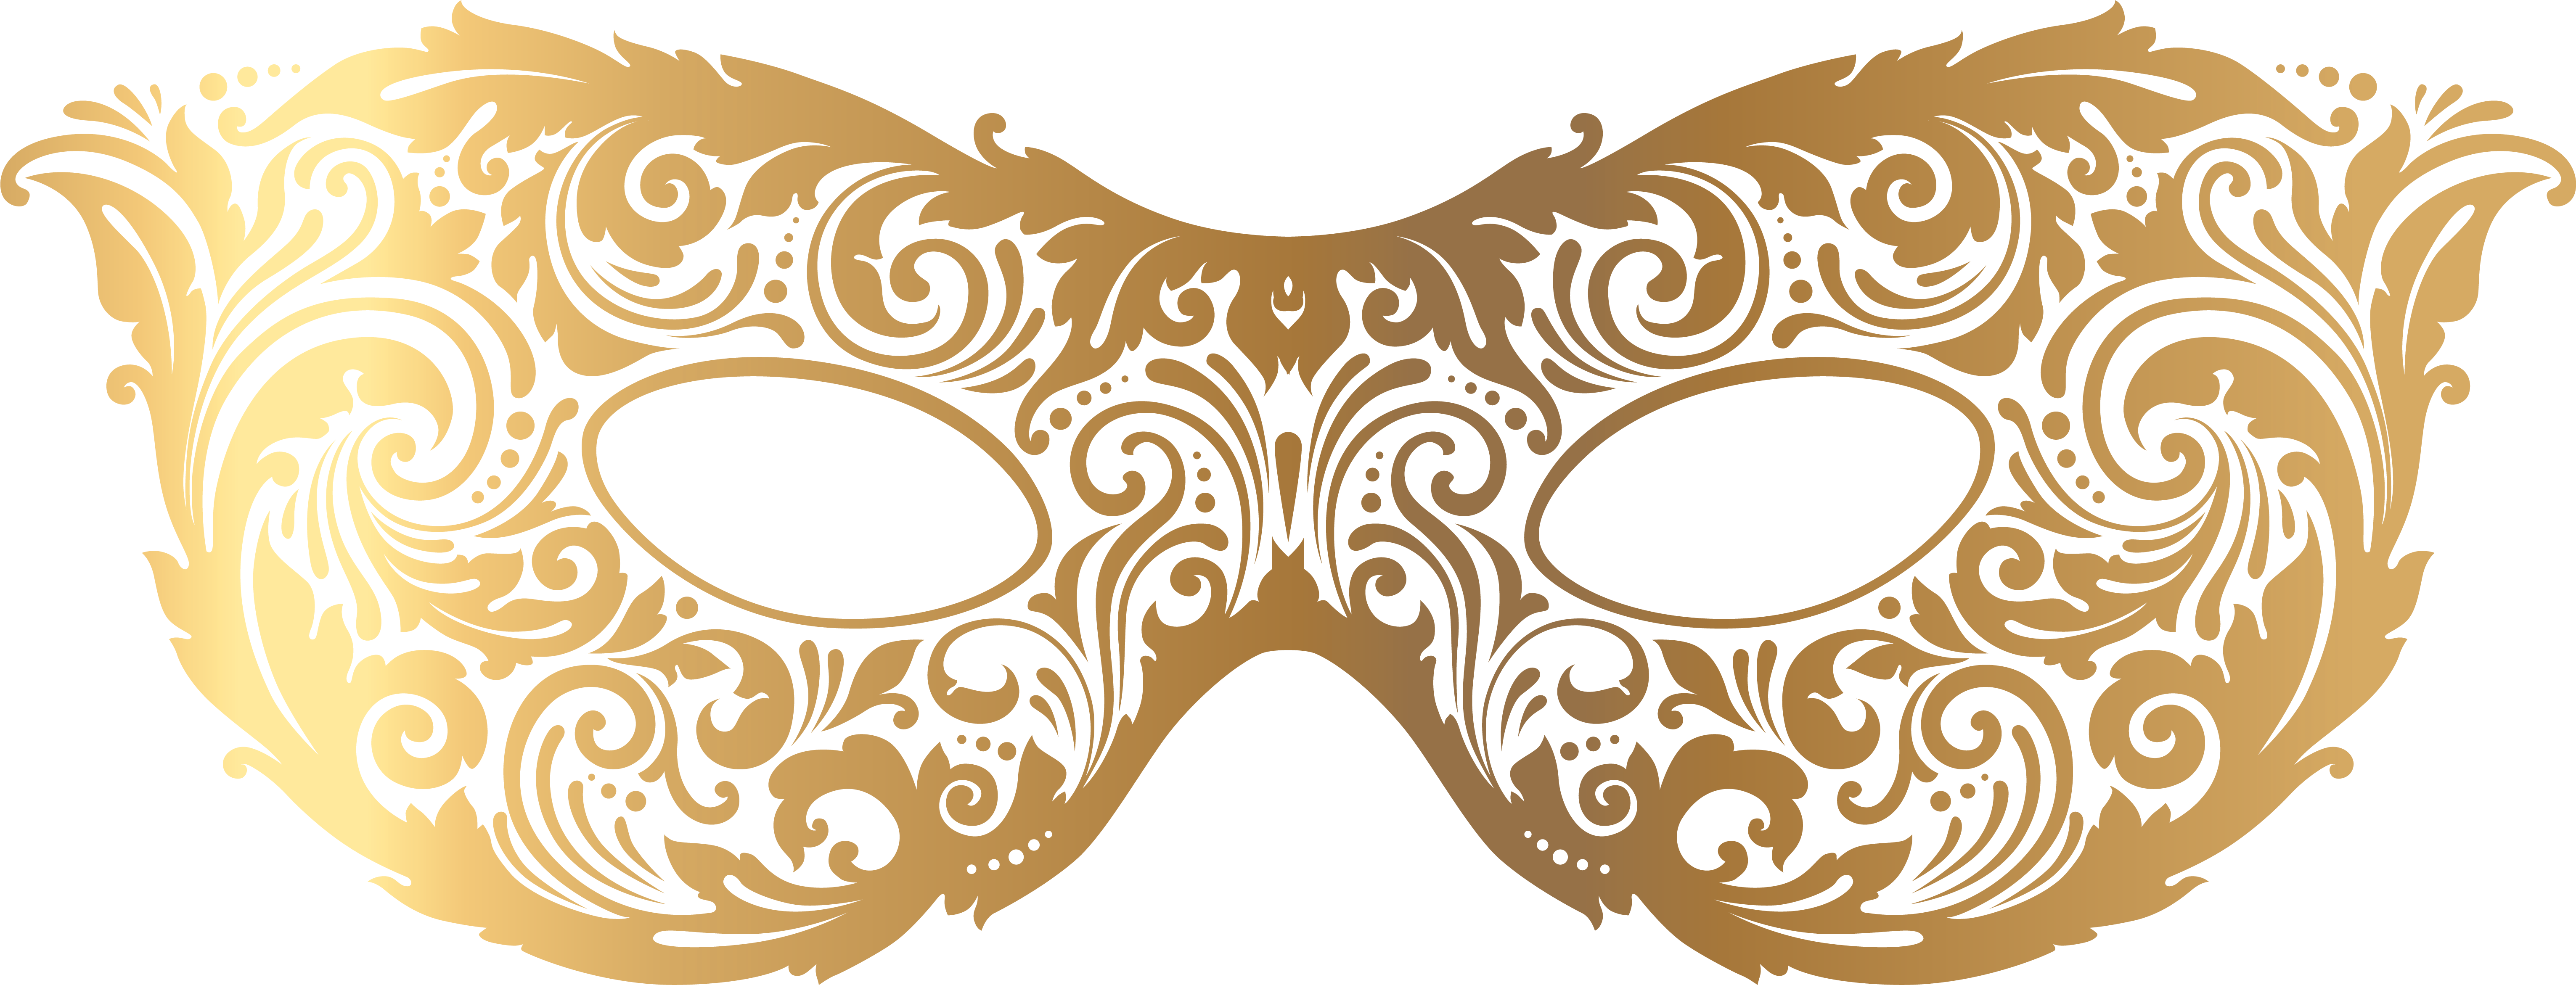 Gold Carnival Mask Image Png Image Clipart Masquerade